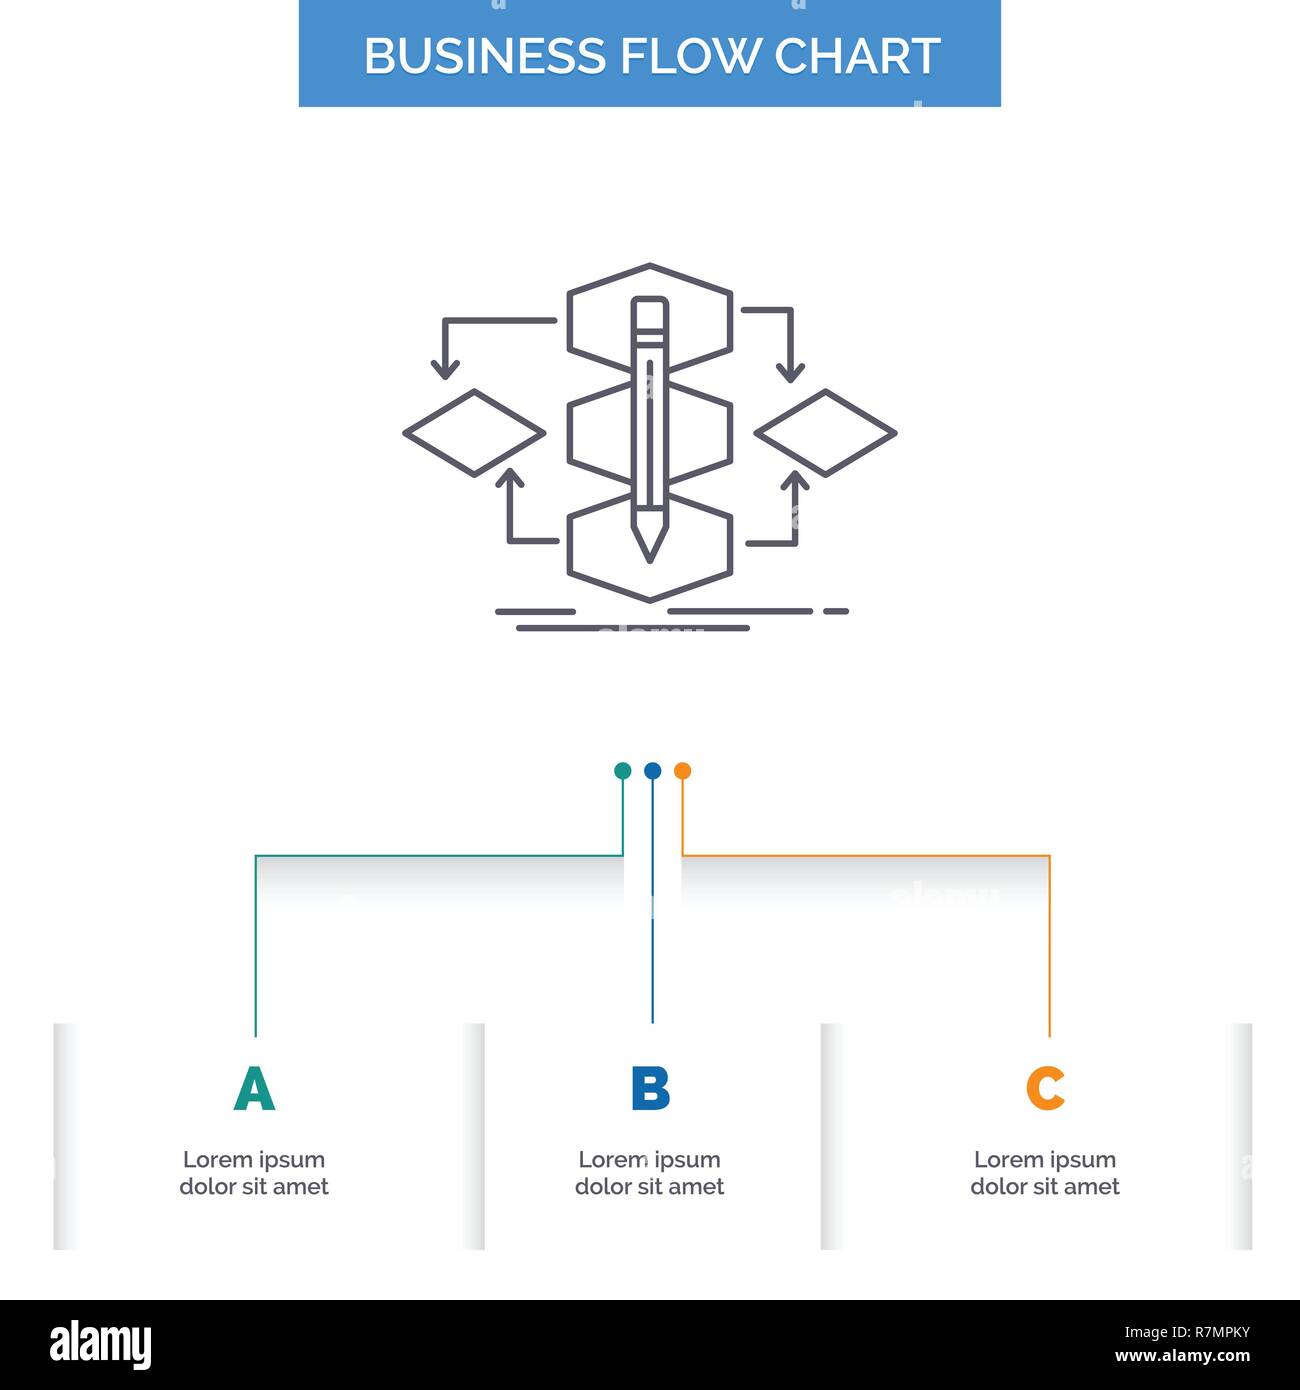 Business Model Flow Chart